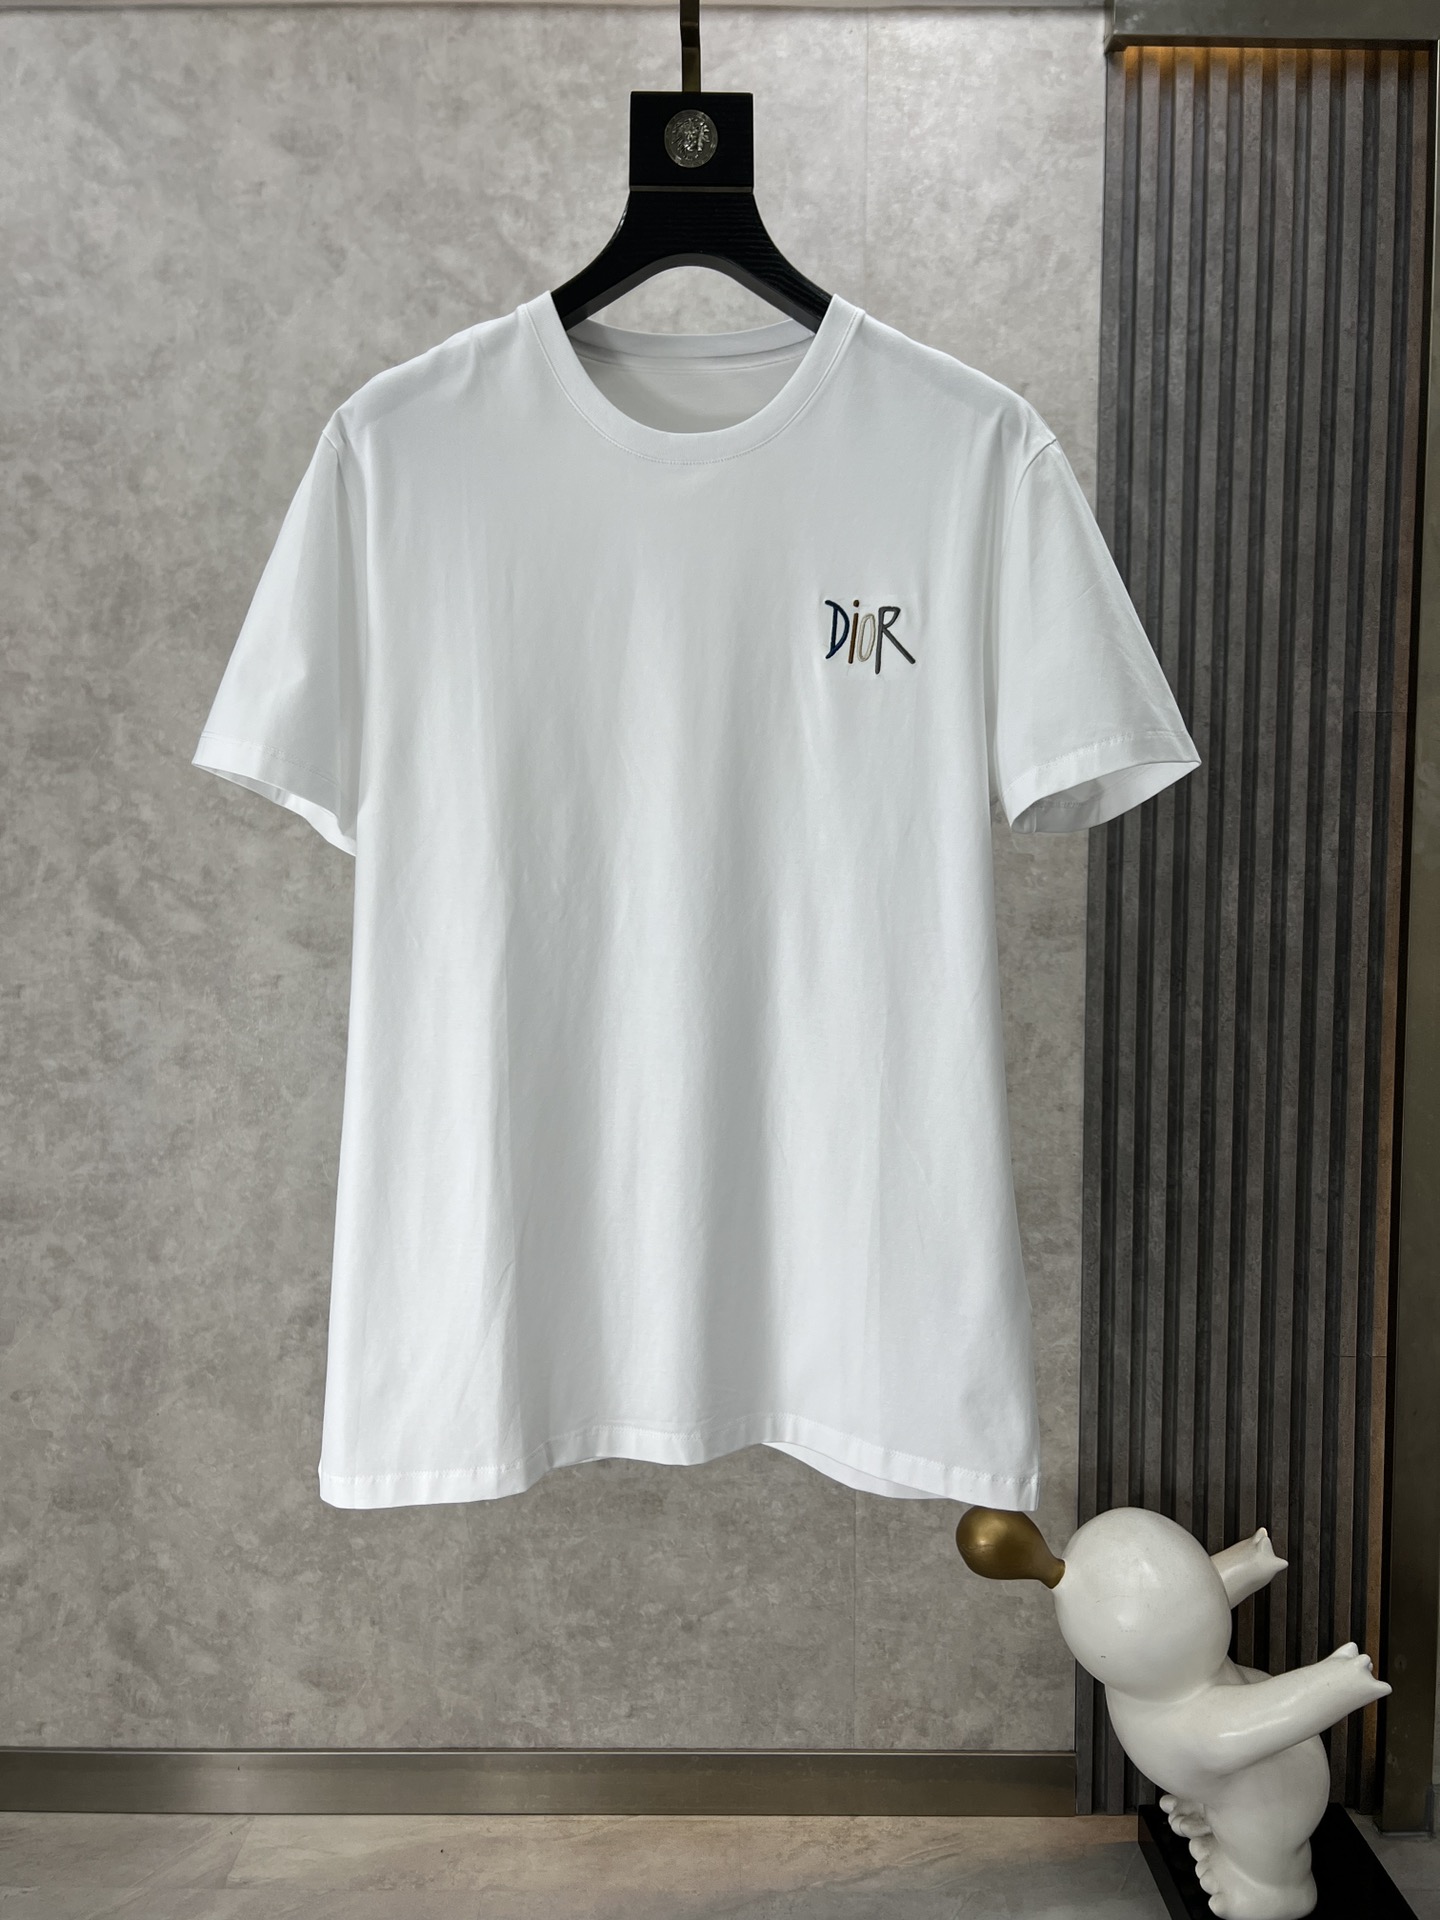 Dior Clothing T-Shirt Cotton Stretch Fashion Short Sleeve